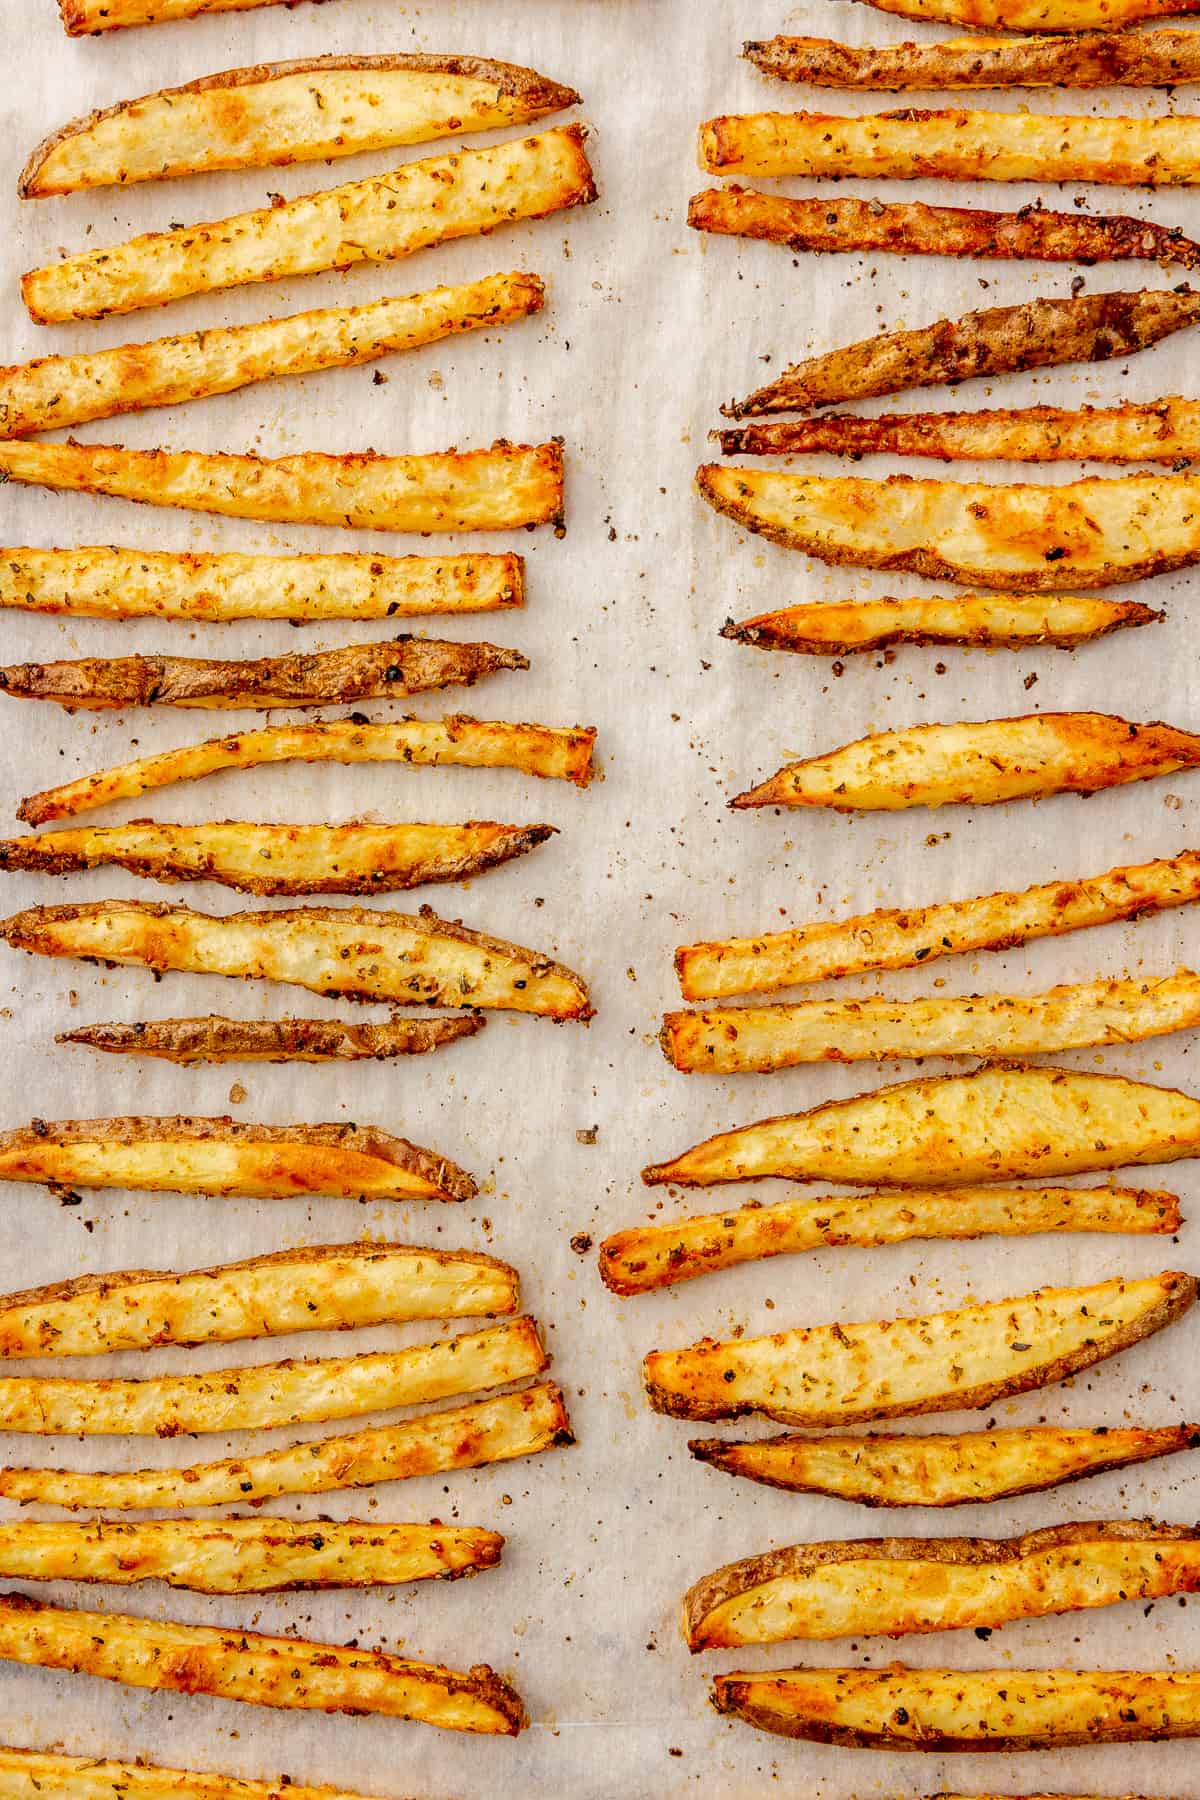 Seasoned baked fries on a sheet pan.